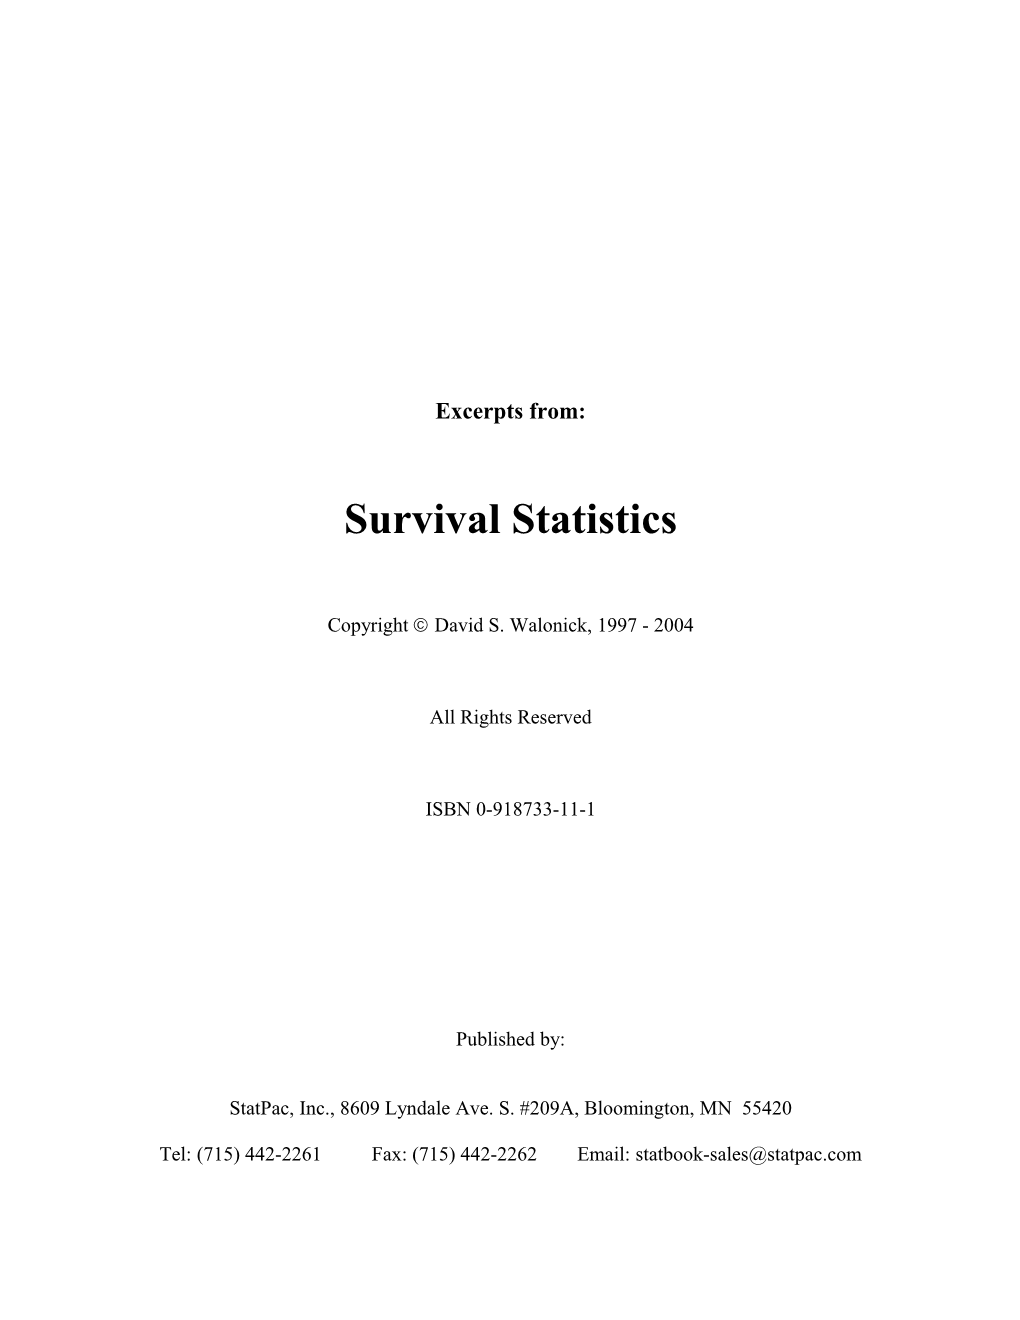 Survival Statistics